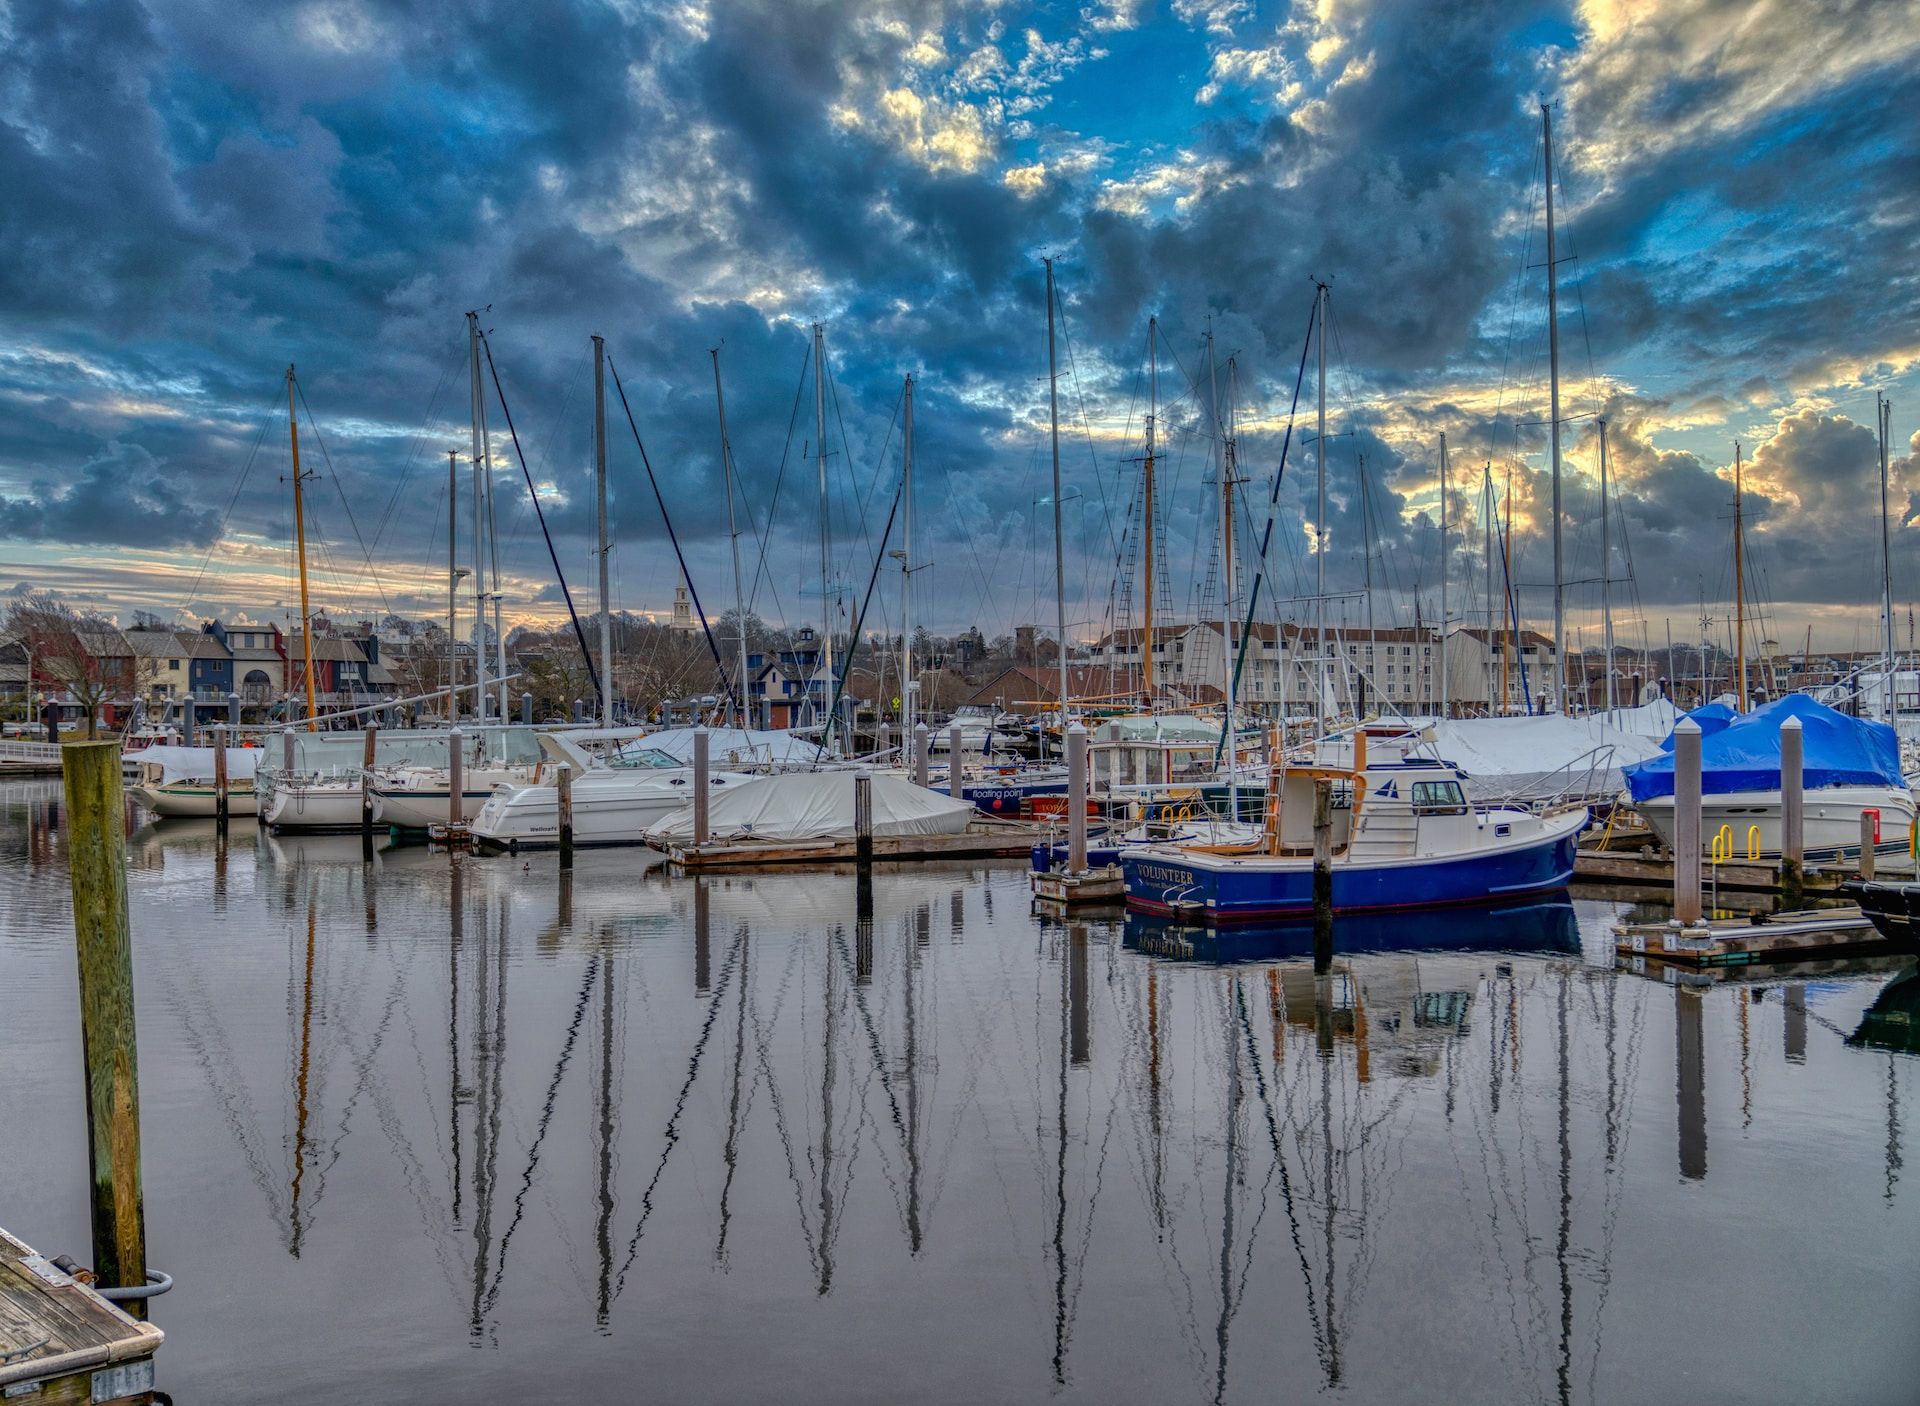 View of a harbor in Newport, Rhode Island